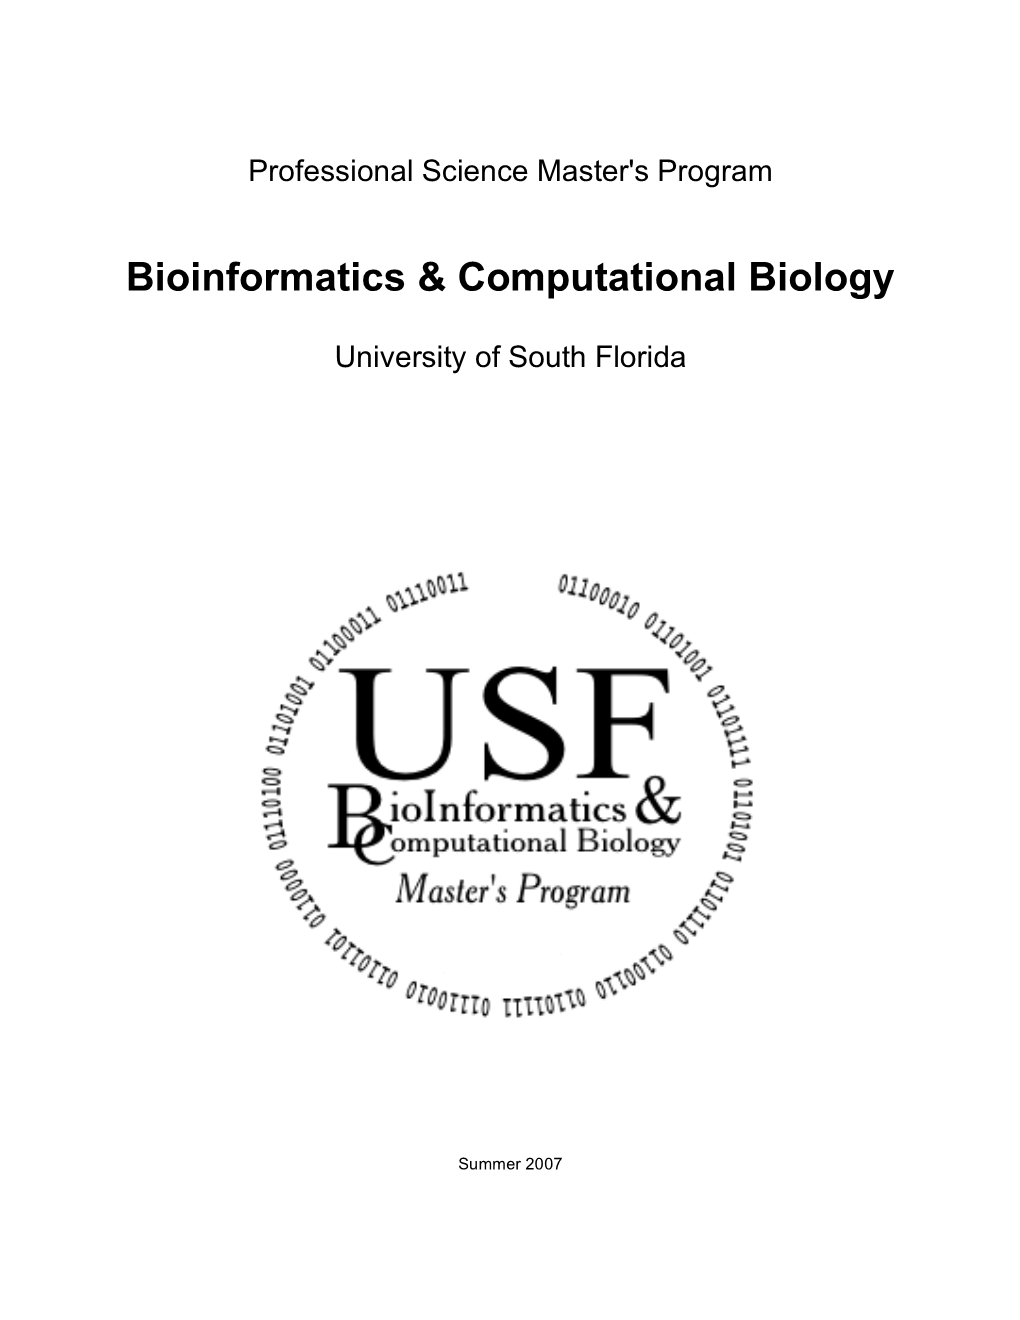 Bioinformatics & Computational Biology